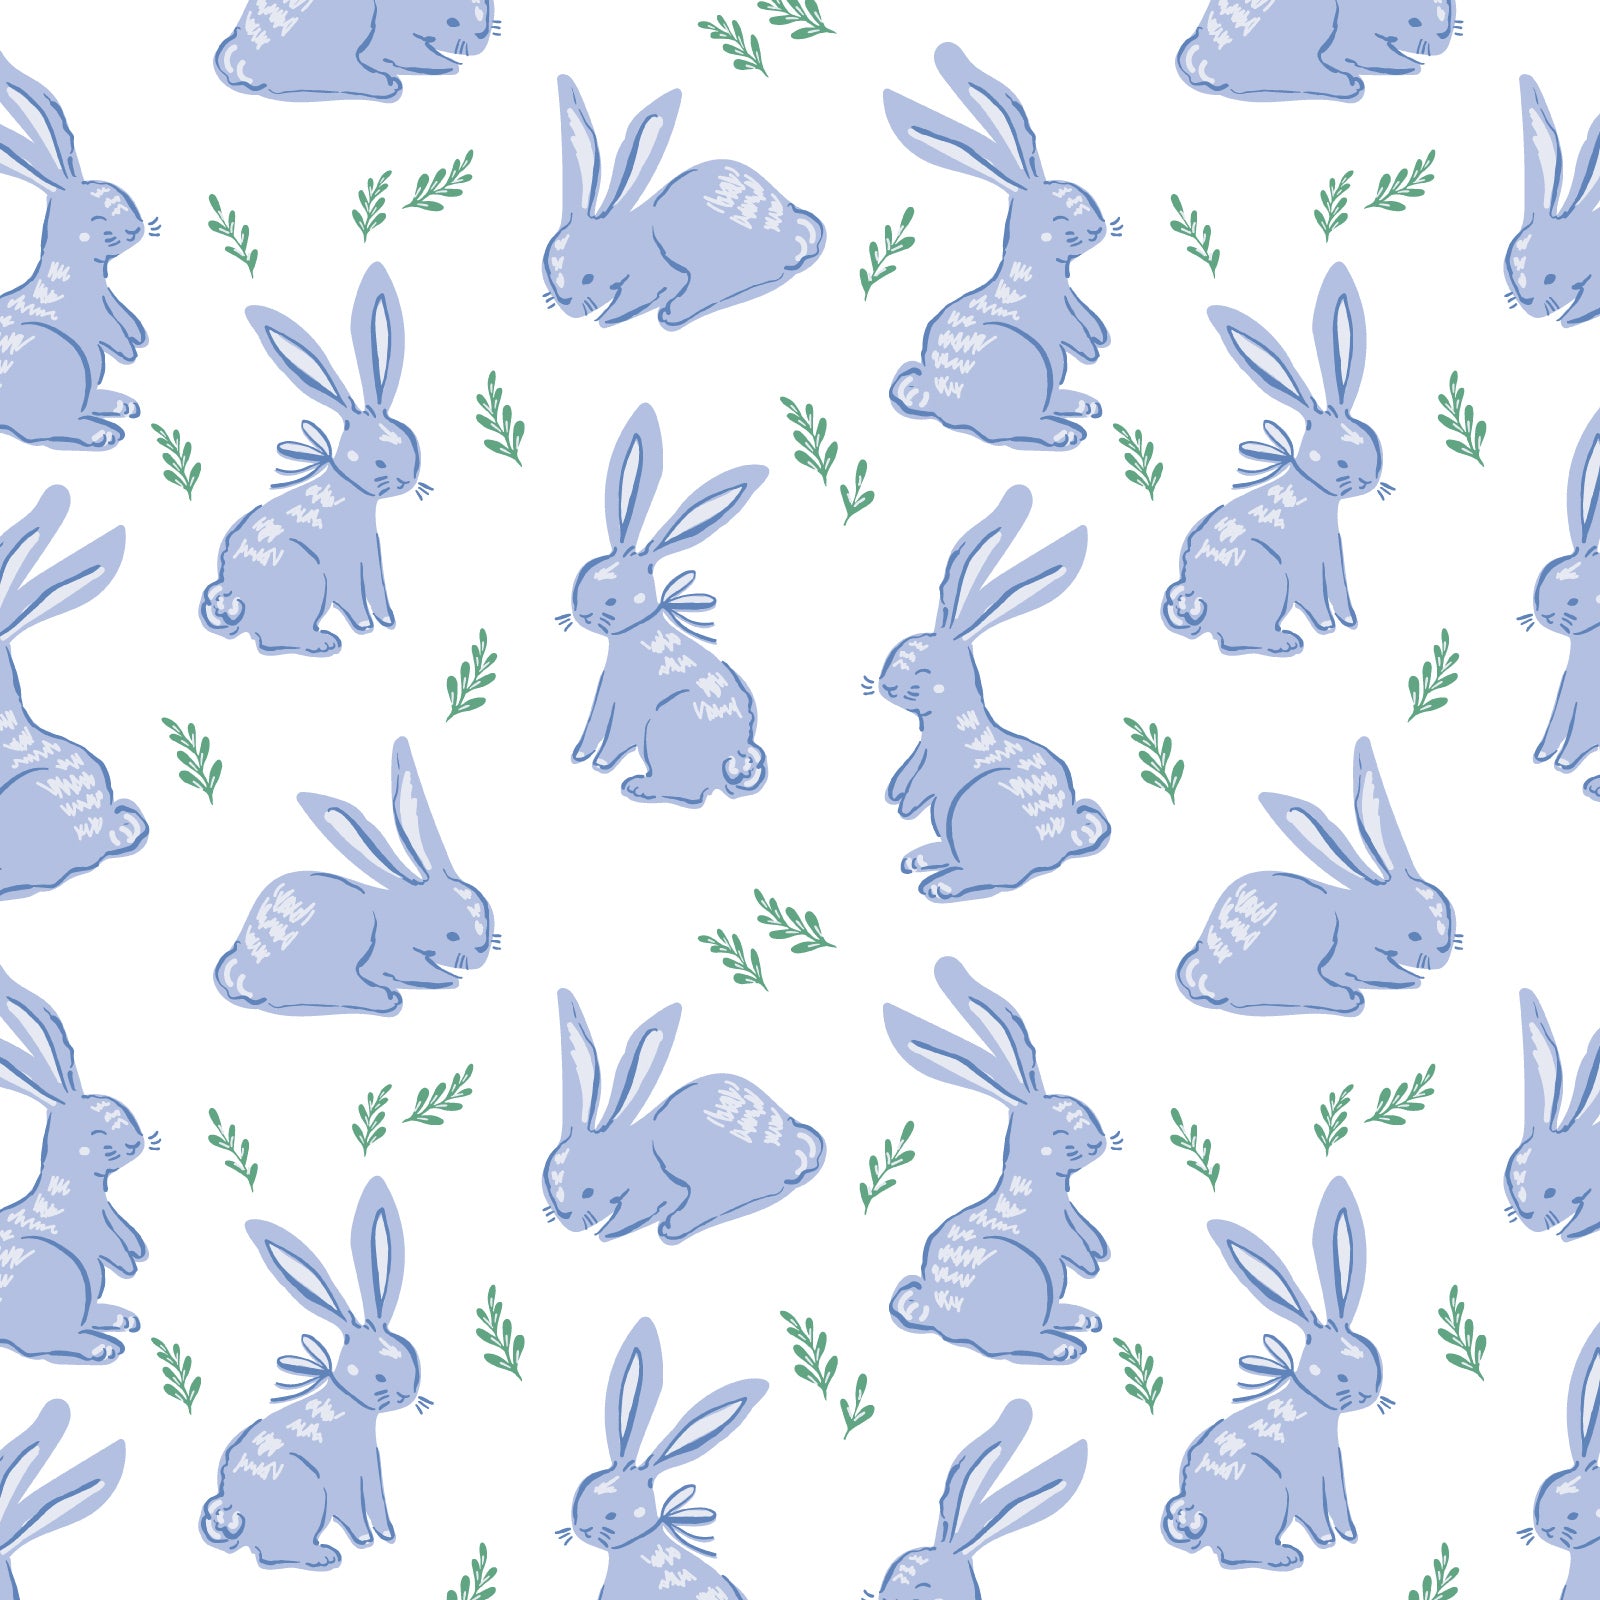 Jack Boys' Pima Cotton Pajama Set-- Bunny Hop Blue